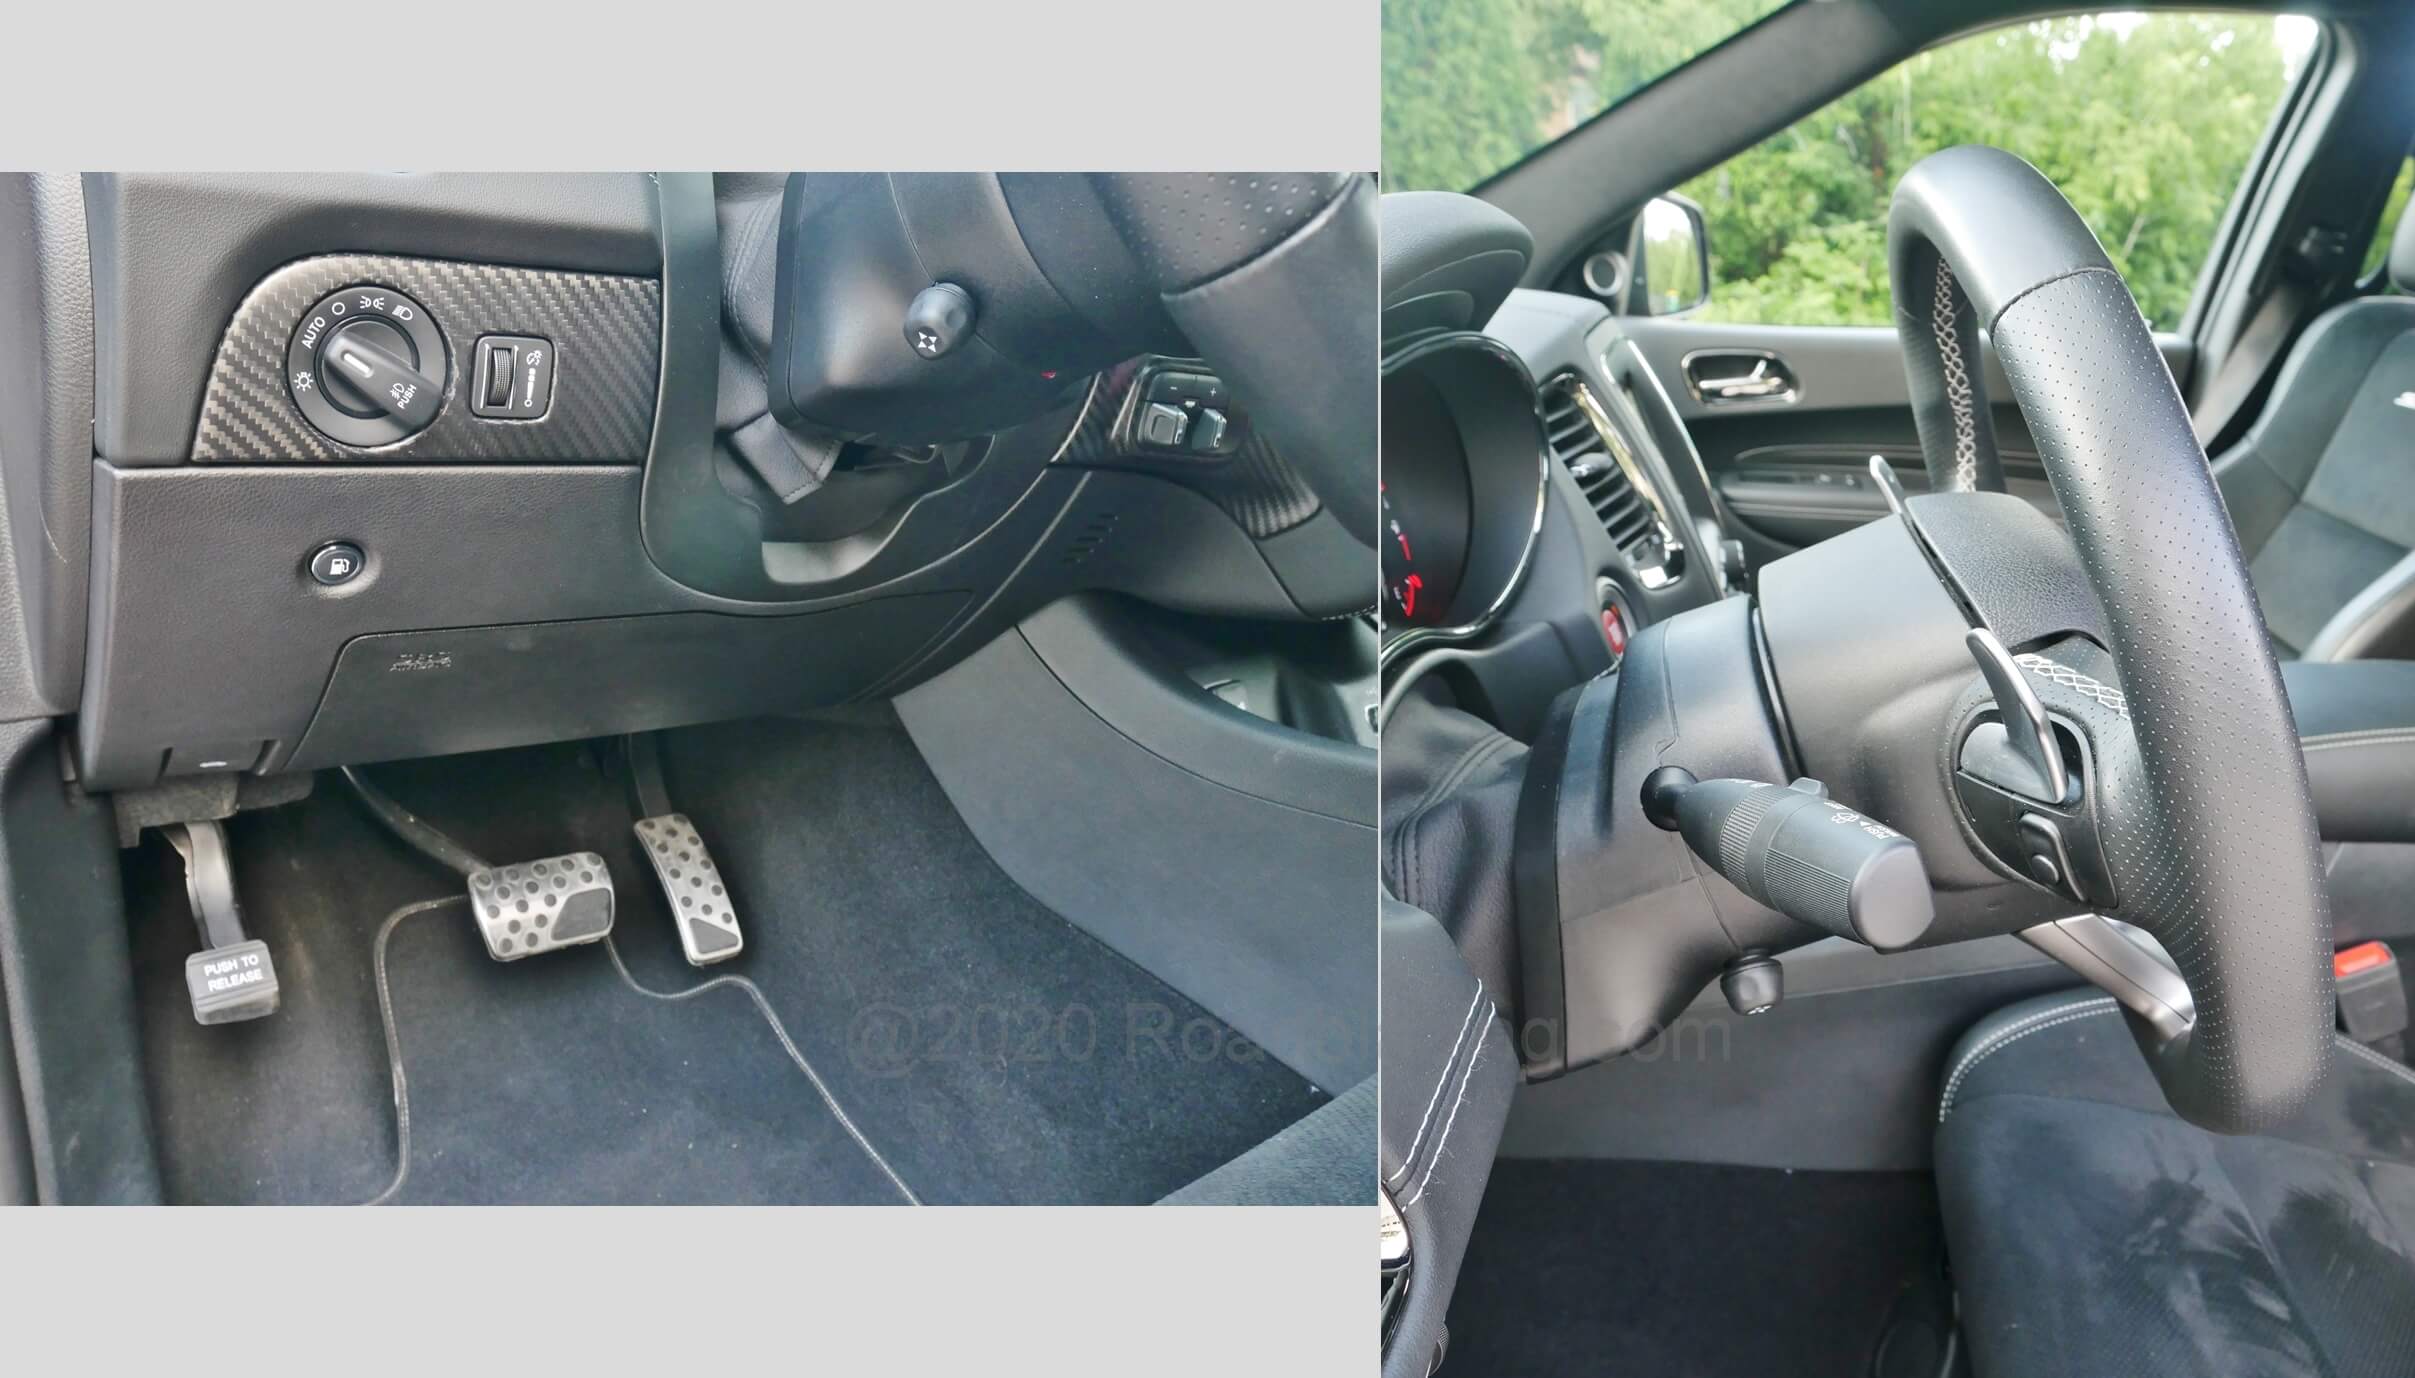 2020 Dodge Durango SRT 392: driver entry aluminum pedals, heated power tilt/ telescoping steering wheel w/ magnesium transmission shift paddles